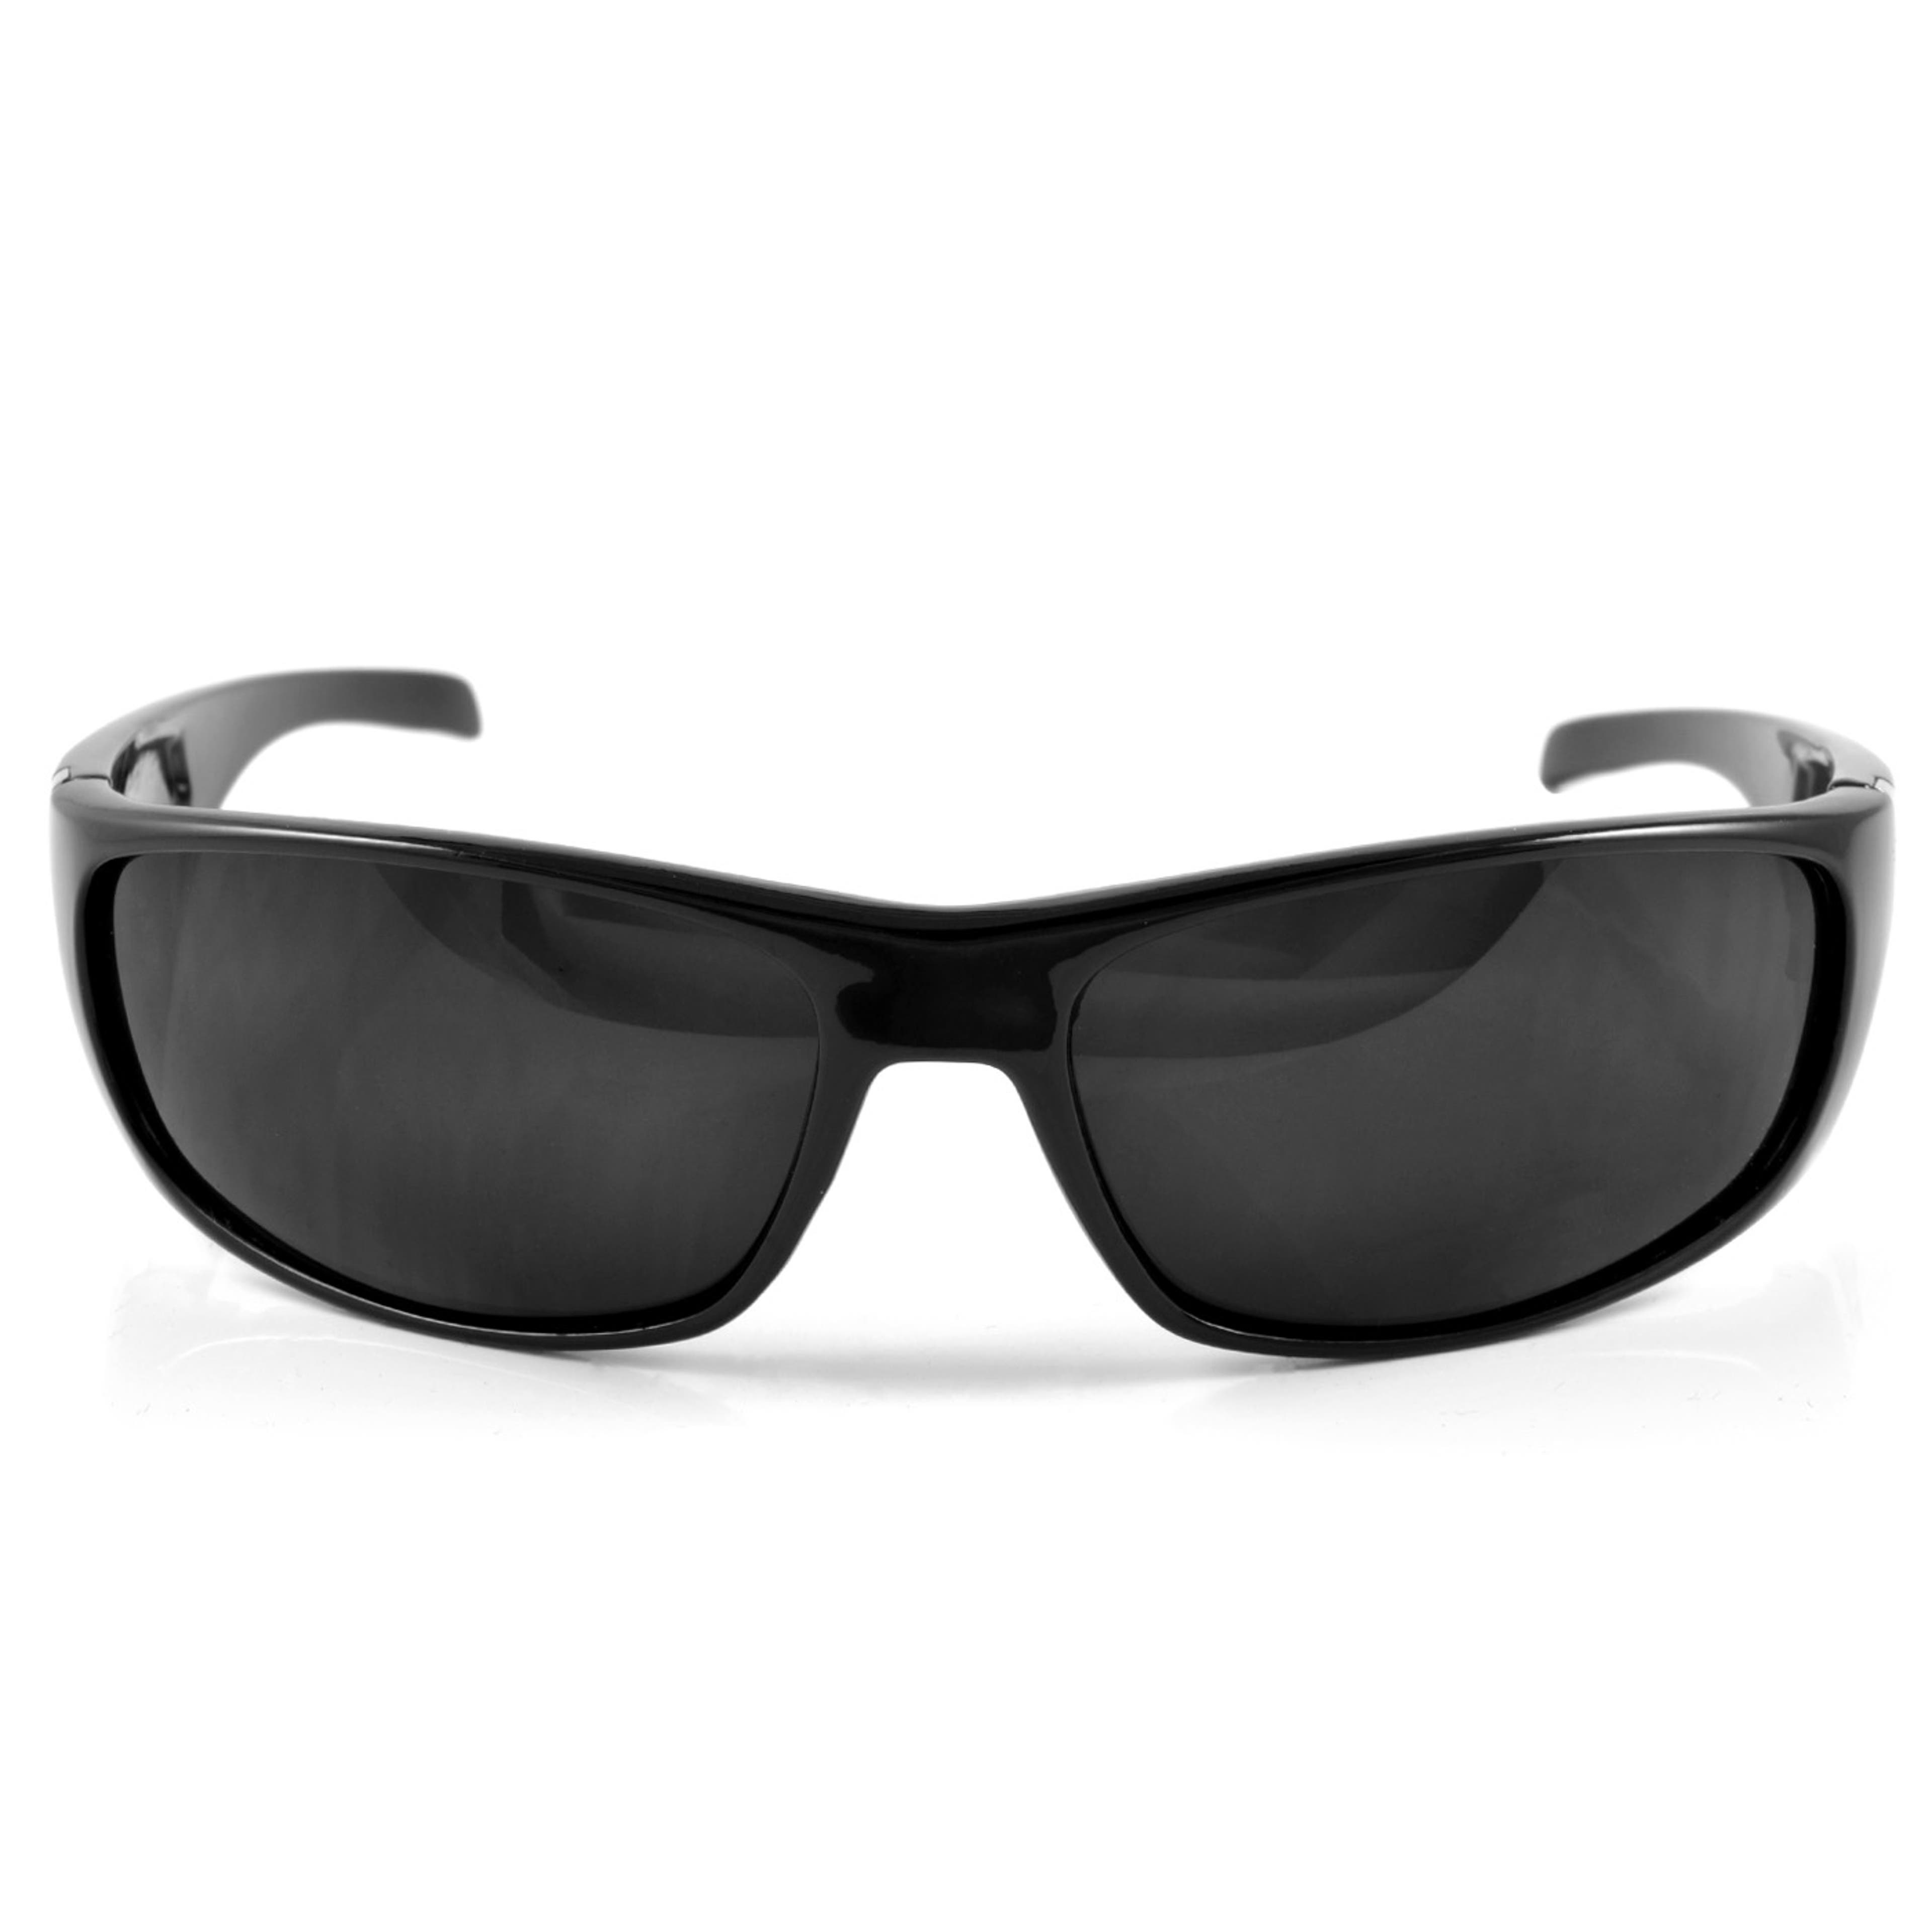 Black Locs Wrap Around Sunglasses, In stock!